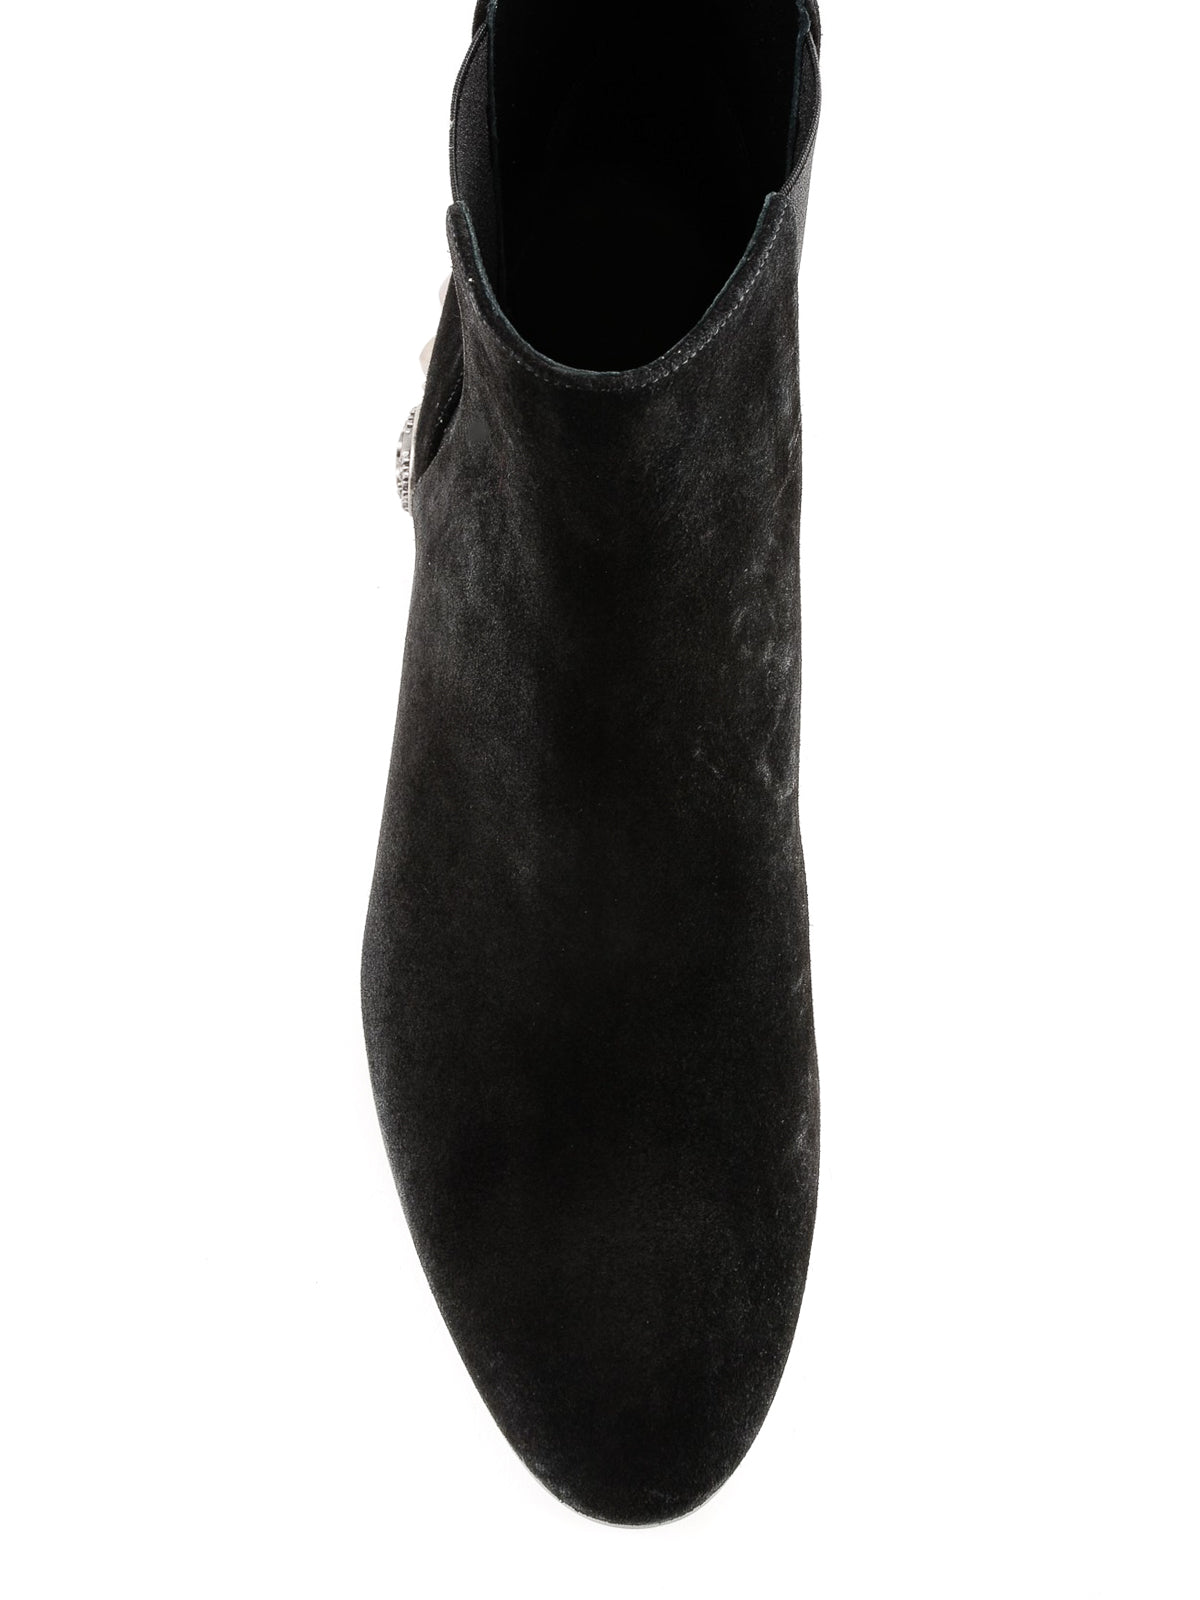 Dolce & Gabbana Black Studded Ankle Boots